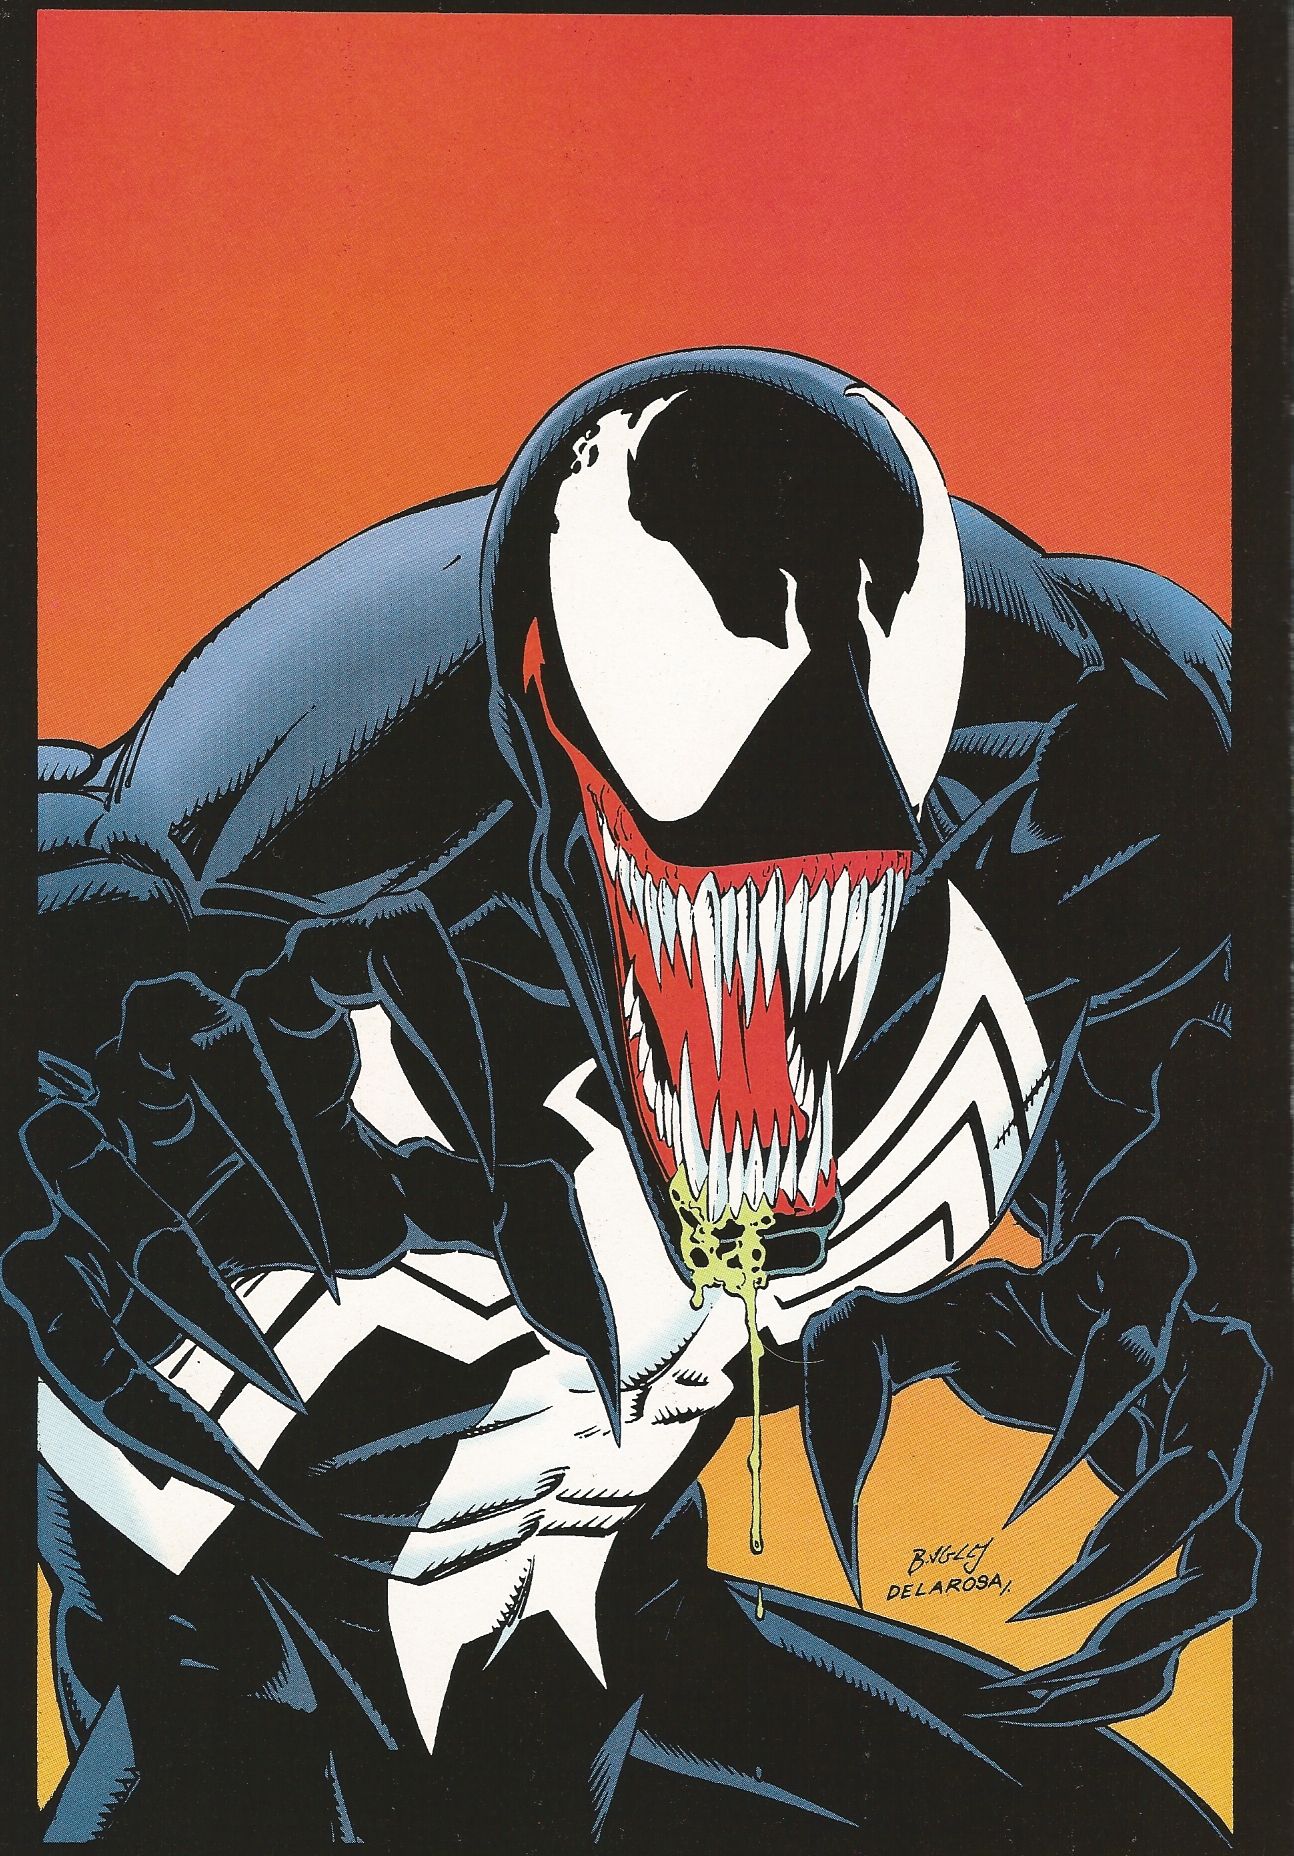 Venom wallpaper. Venom comics, Venom comic book, Spiderman comic